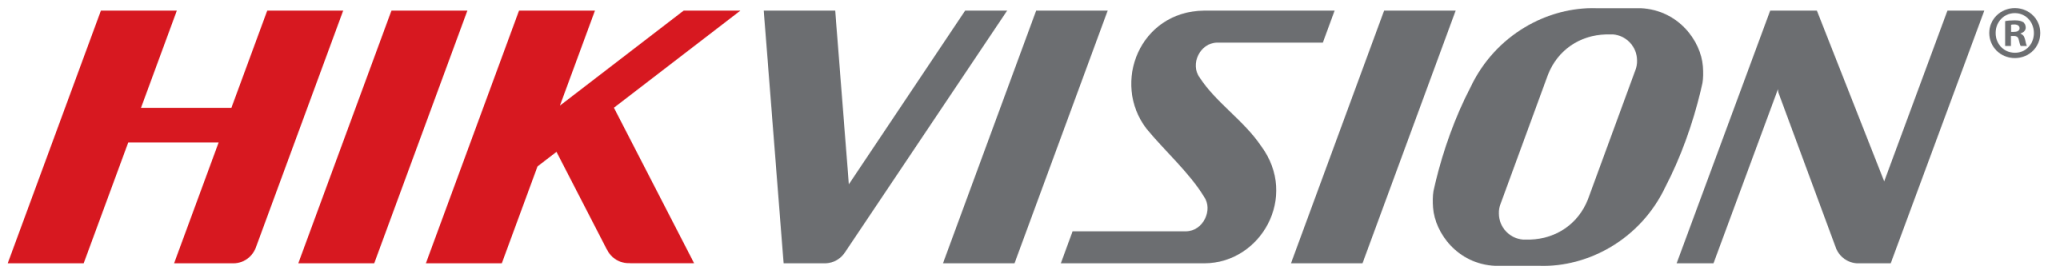 hikvision-logo-2048x274